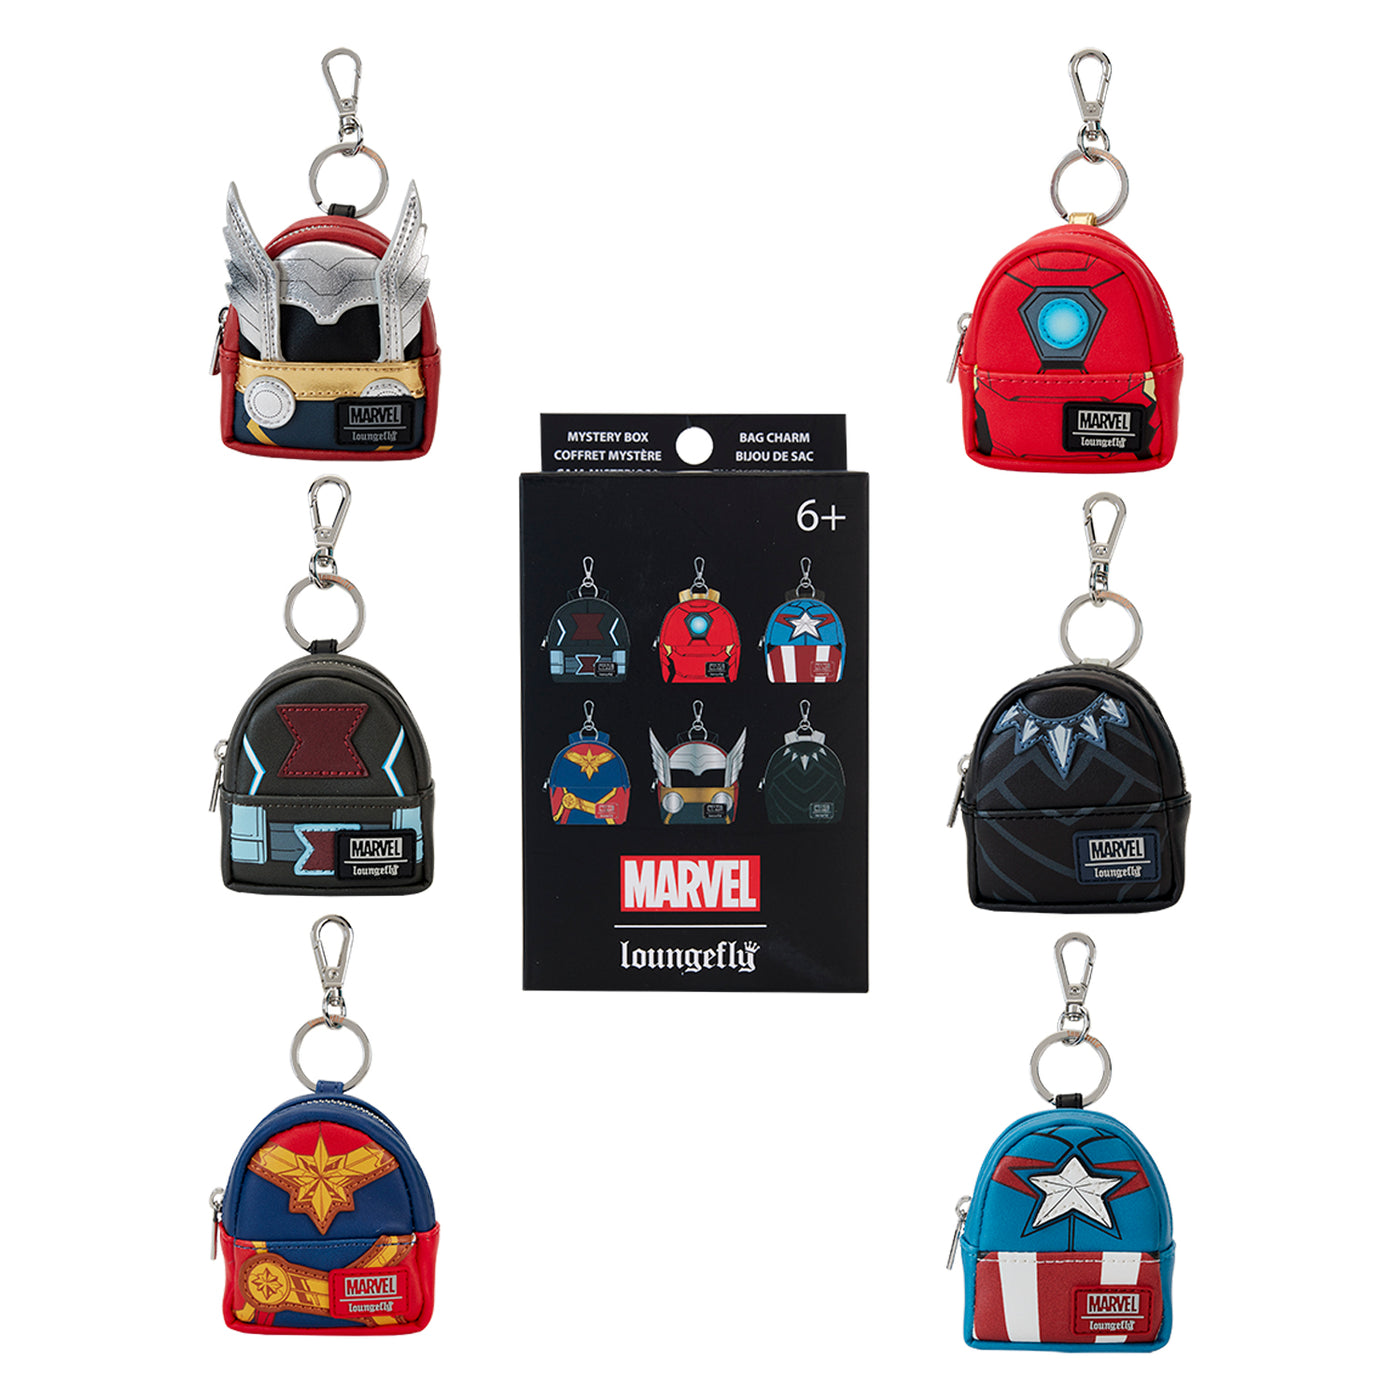 Loungefly Disney Marvel Avengers Cosplay Mystery Box Mini Backpack Keychain